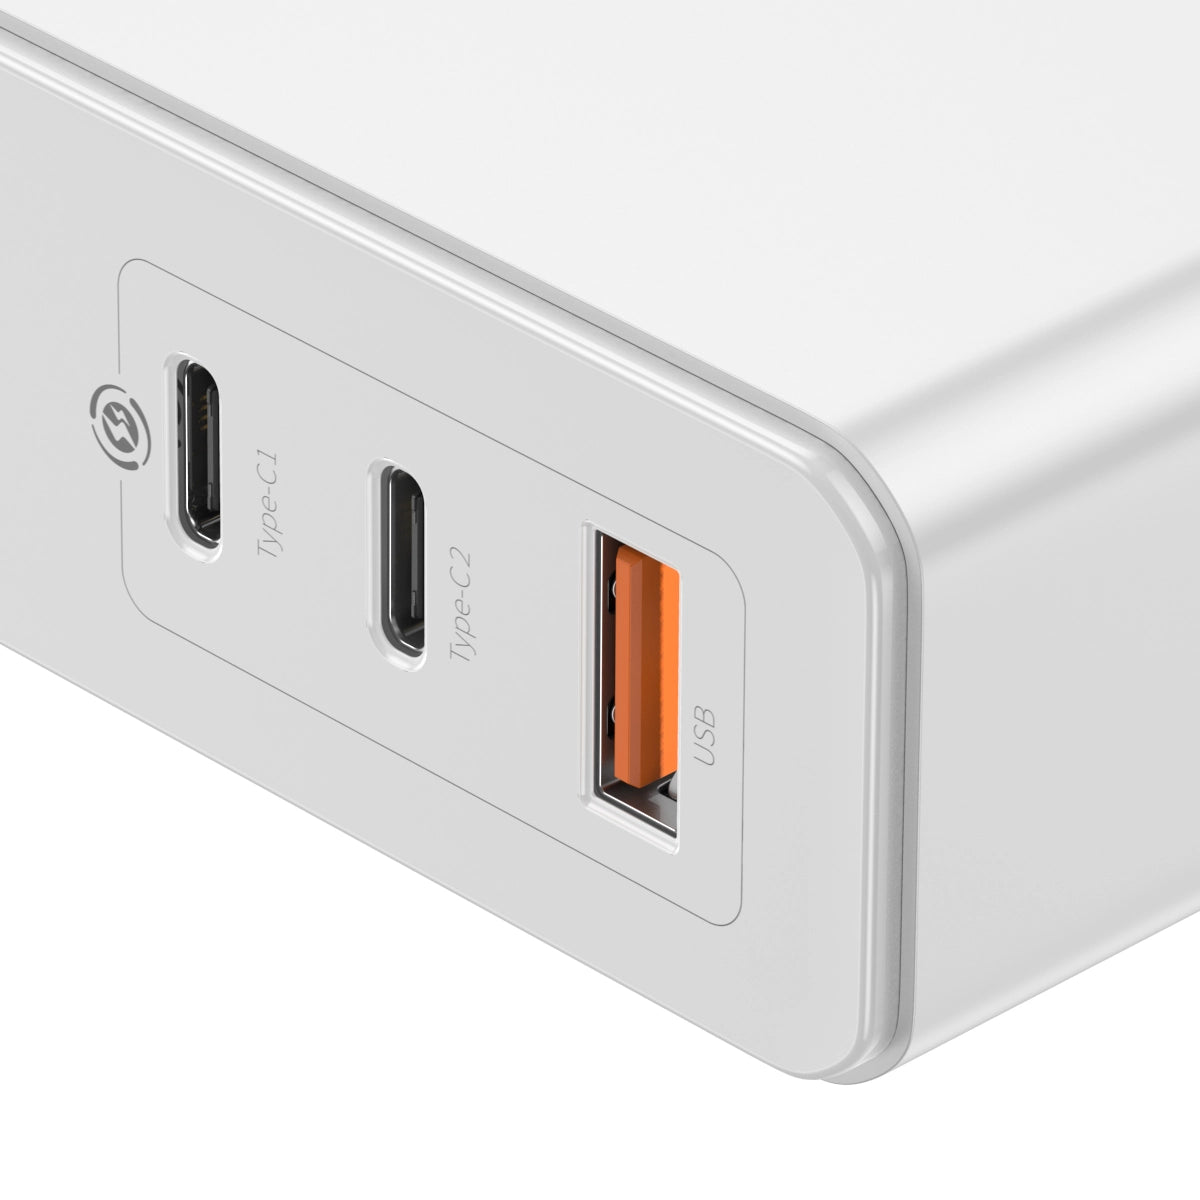 Chargeur GaN USB C 65W 5A Xiaomi, Charge Ultra-rapide + Câble USB